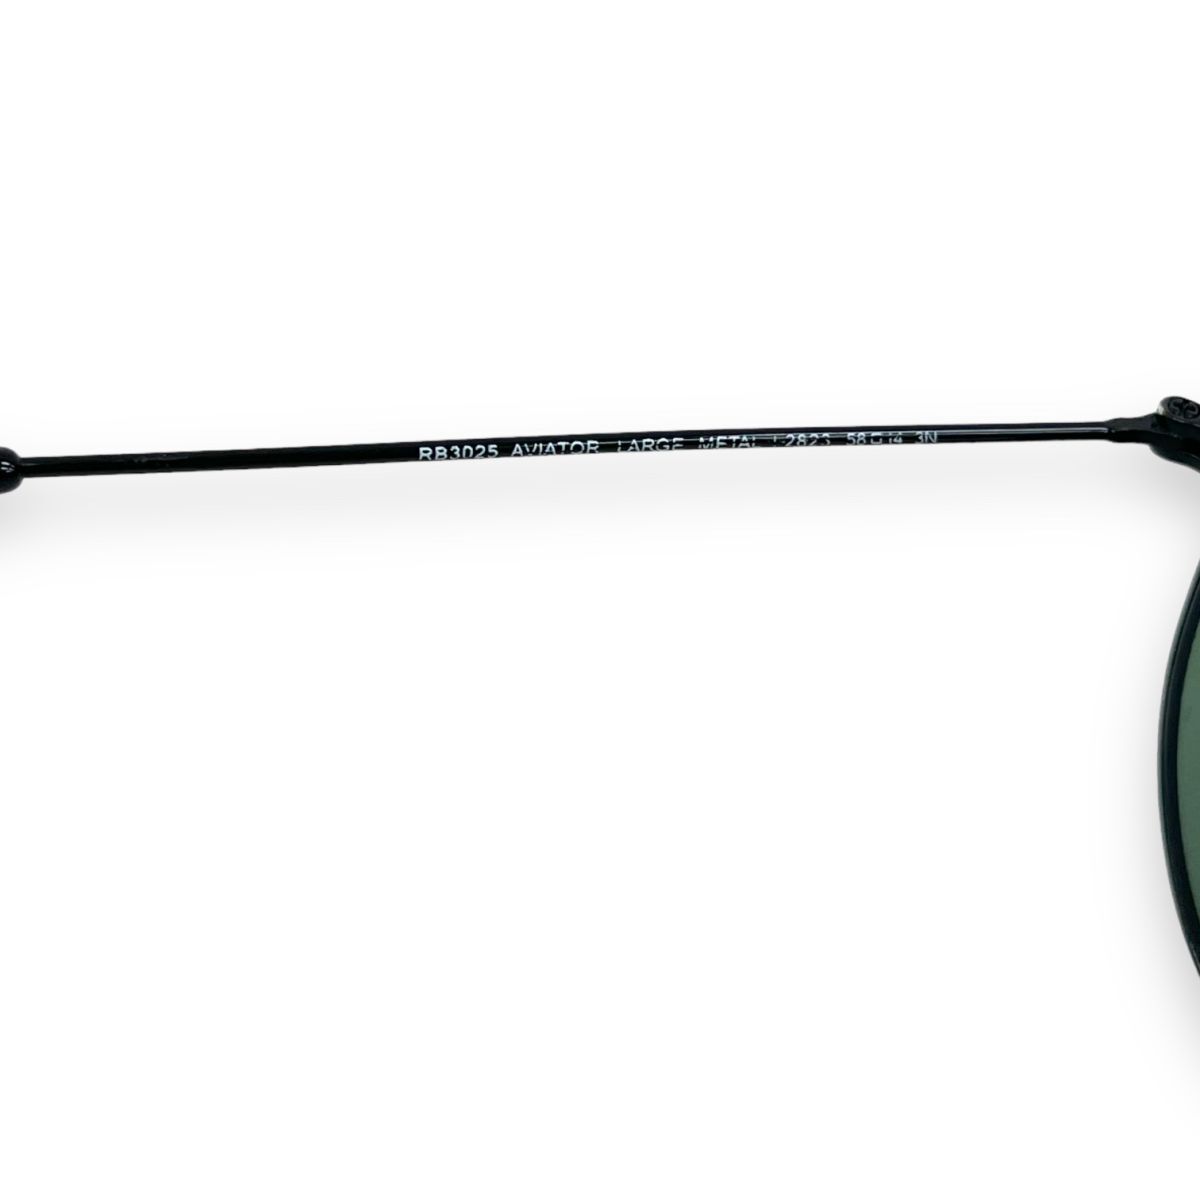 Ray-Ban RayBan sunglasses glasses I wear fashion brand Teardrop RB3025 aviator AVIATOR green 